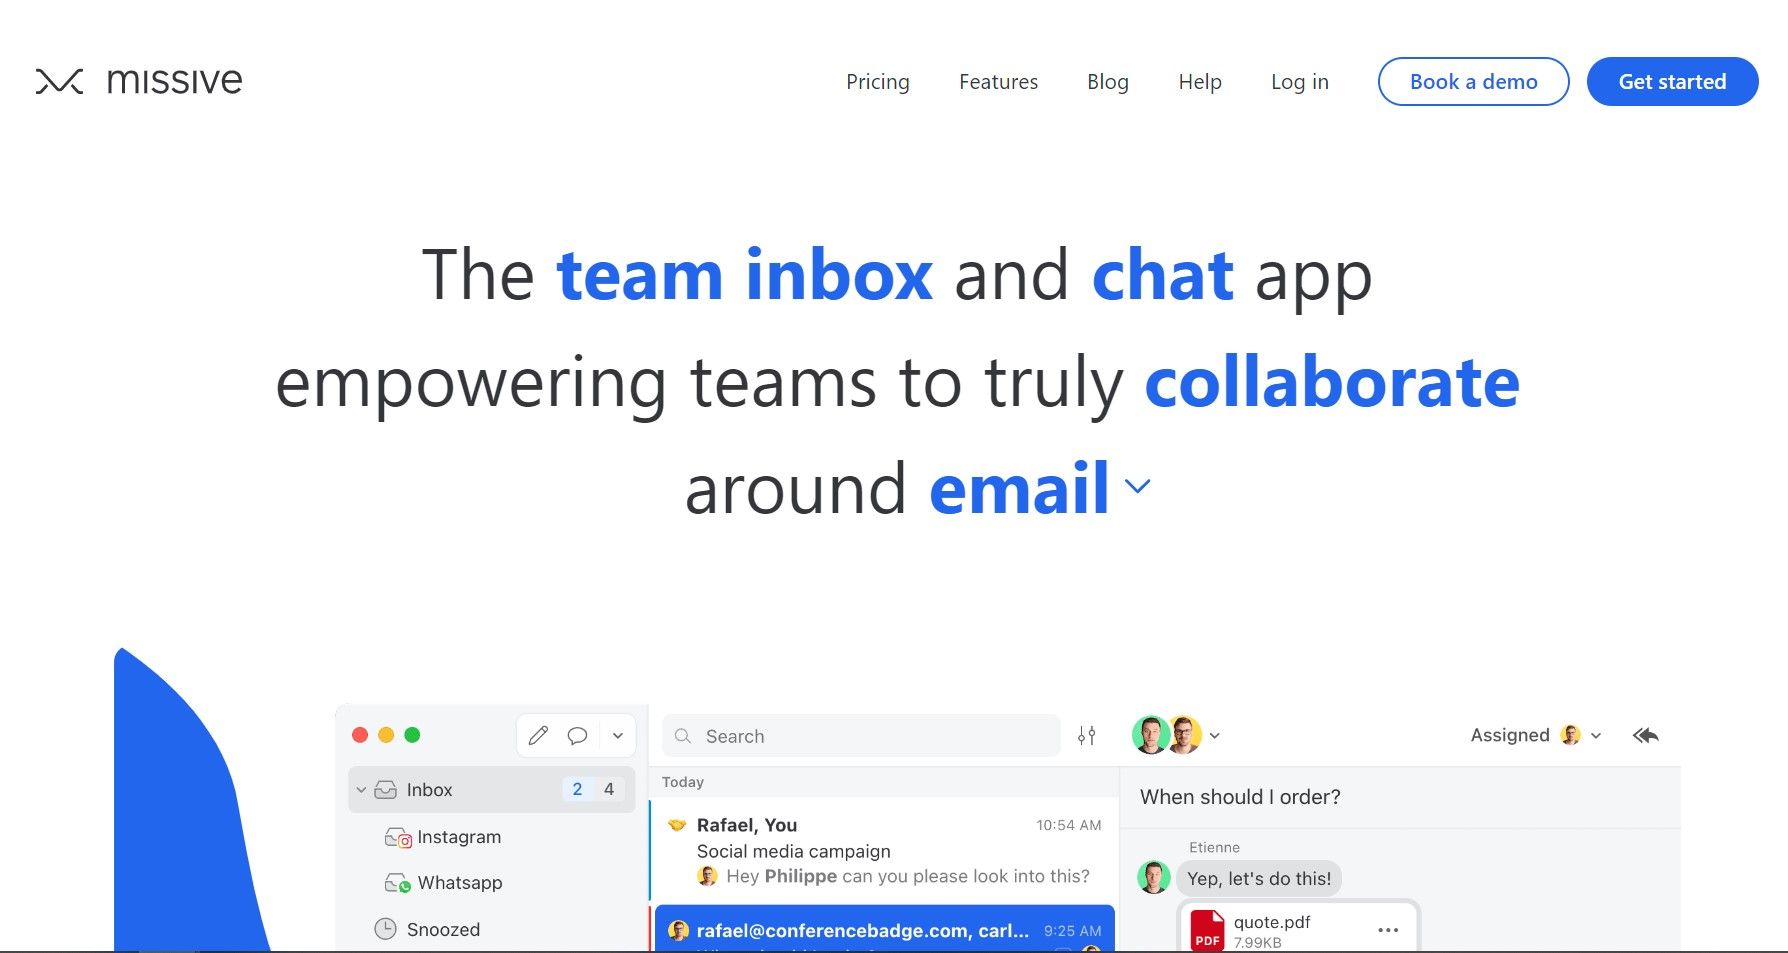 MissiveAI email collaboration management tool enhances productivity for teams